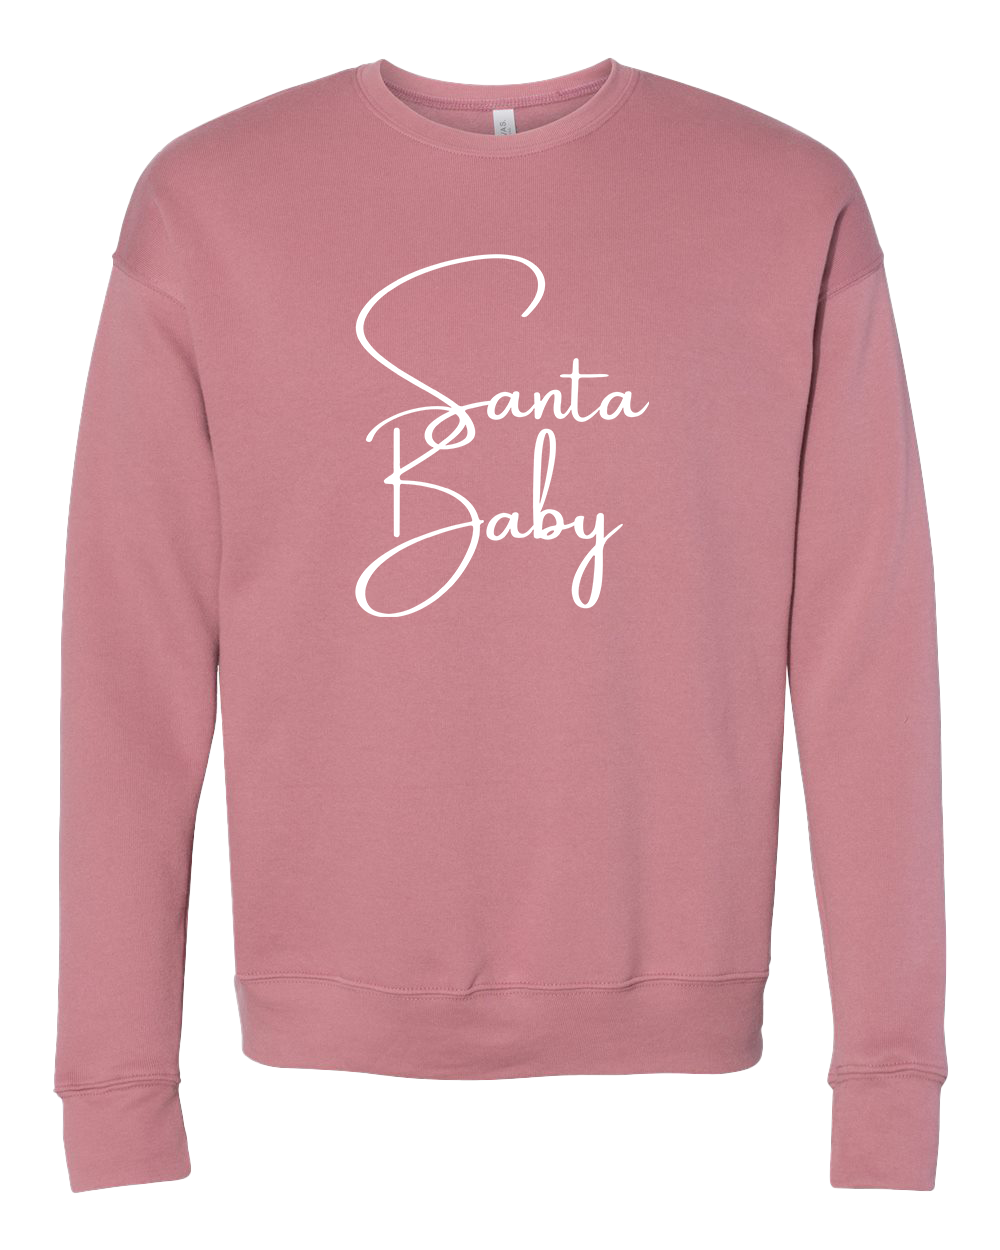 Santa Baby Crew Sweatshirt - Mauve